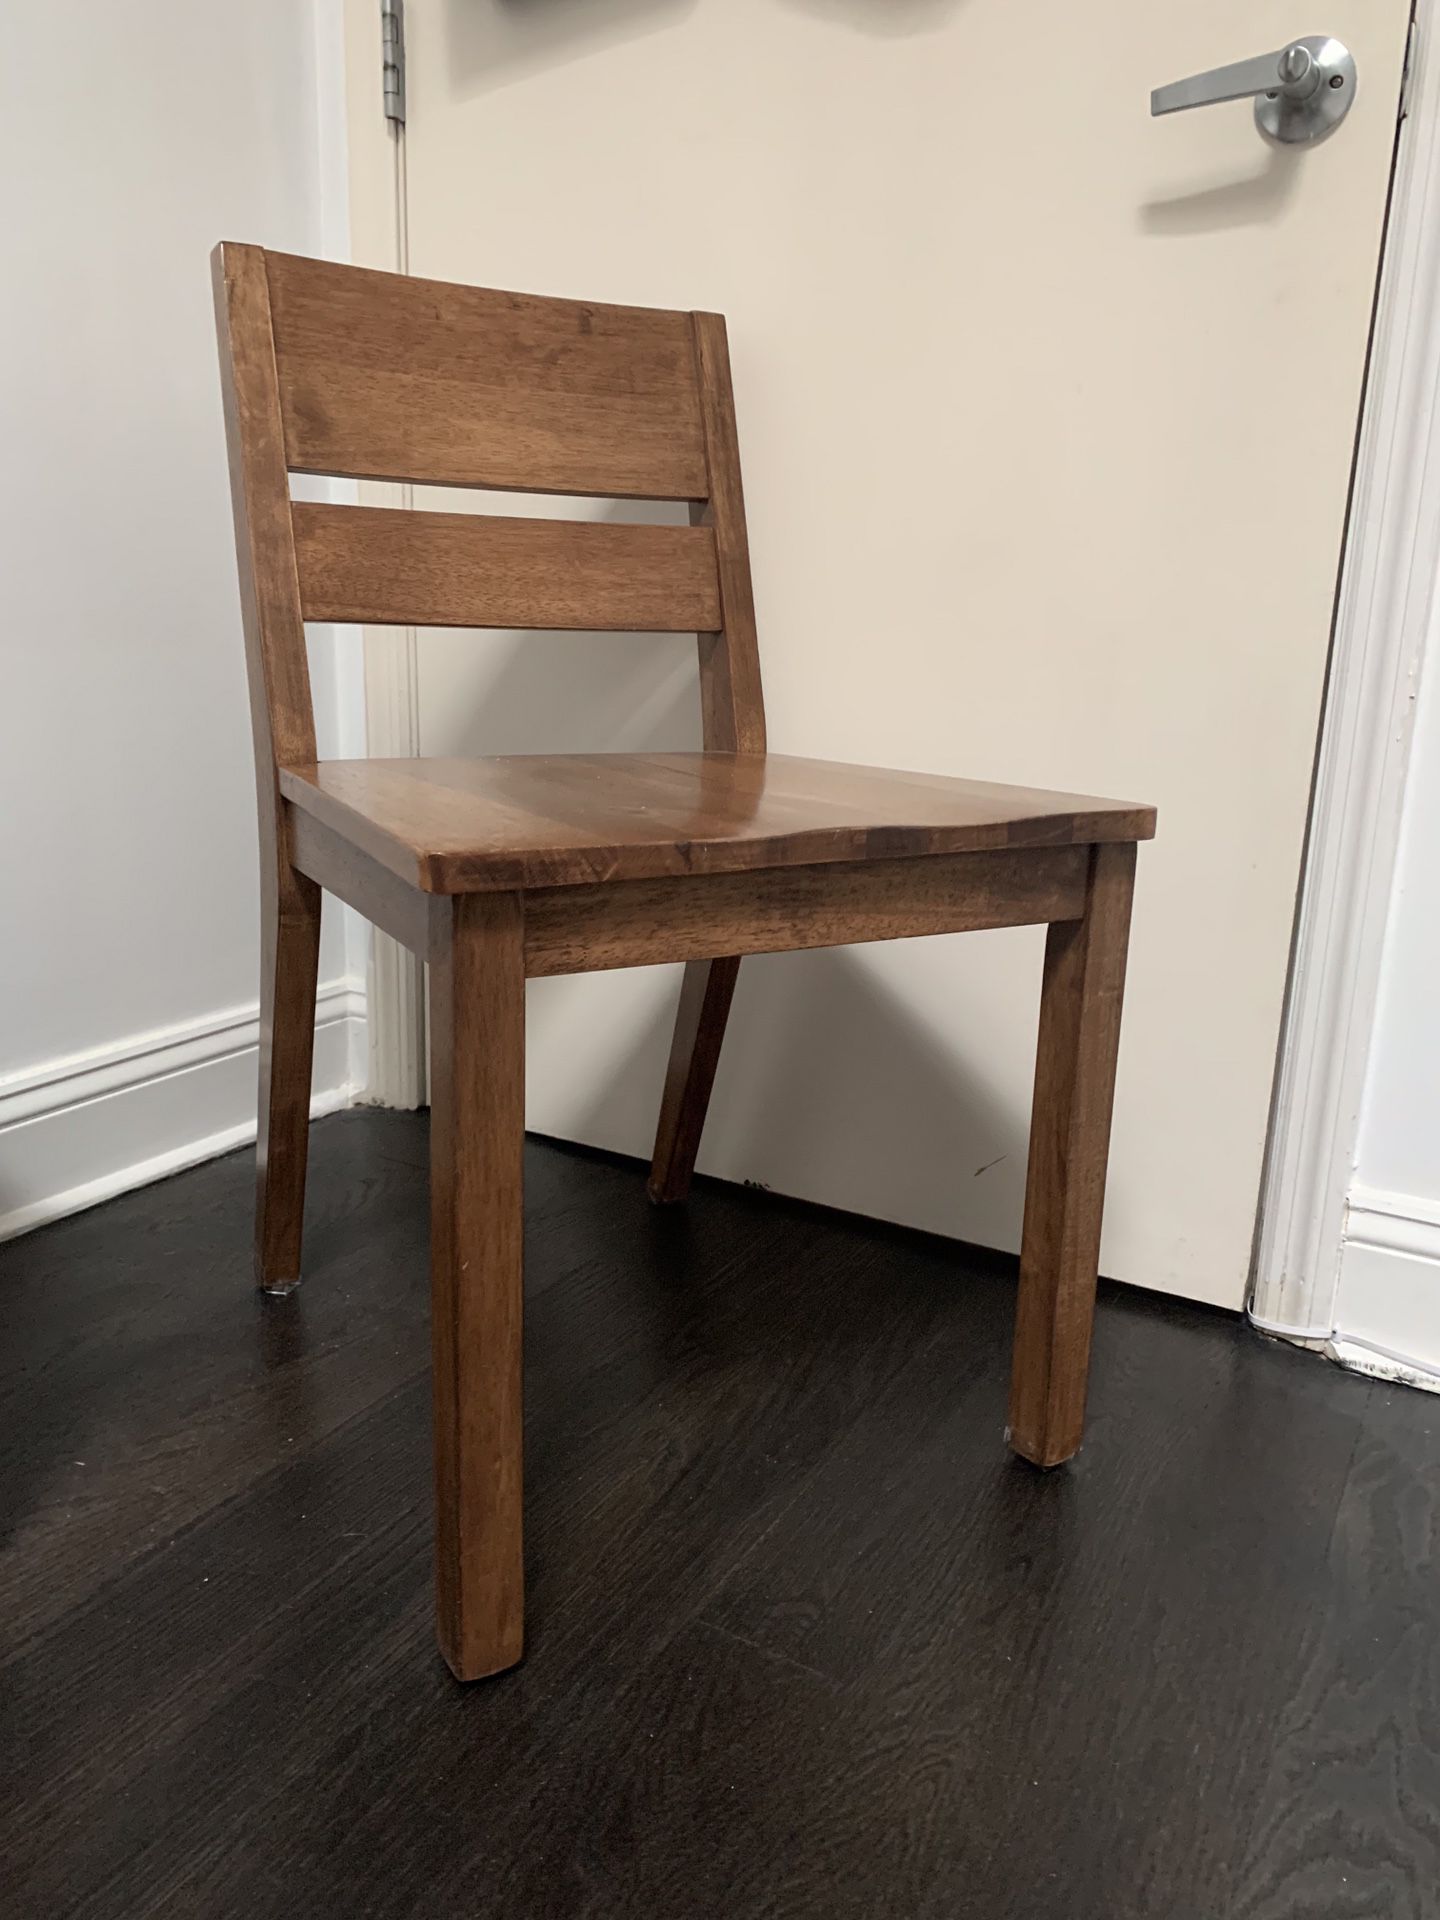 Set of 4 Wooden Chair - Original Price $125